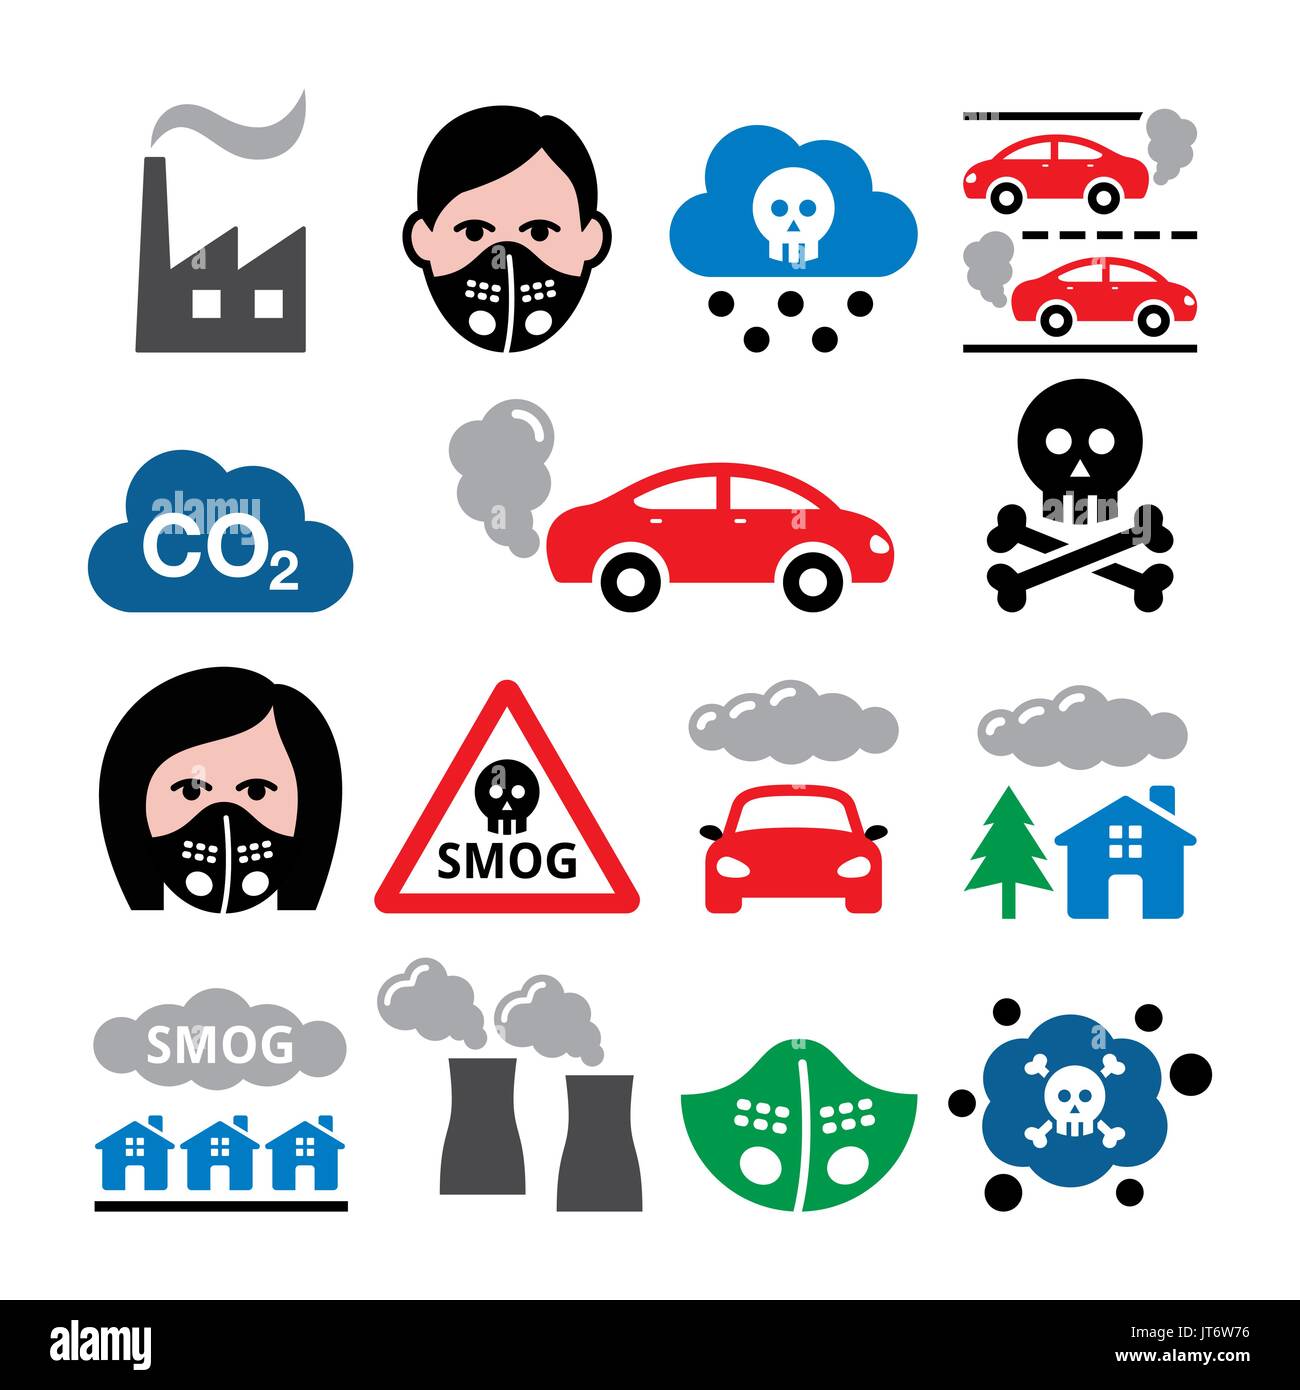 Smog, Umweltverschmutzung, anti pollsution Maske Vector Icons Set - Ökologie, Umwelt Konzept Stock Vektor